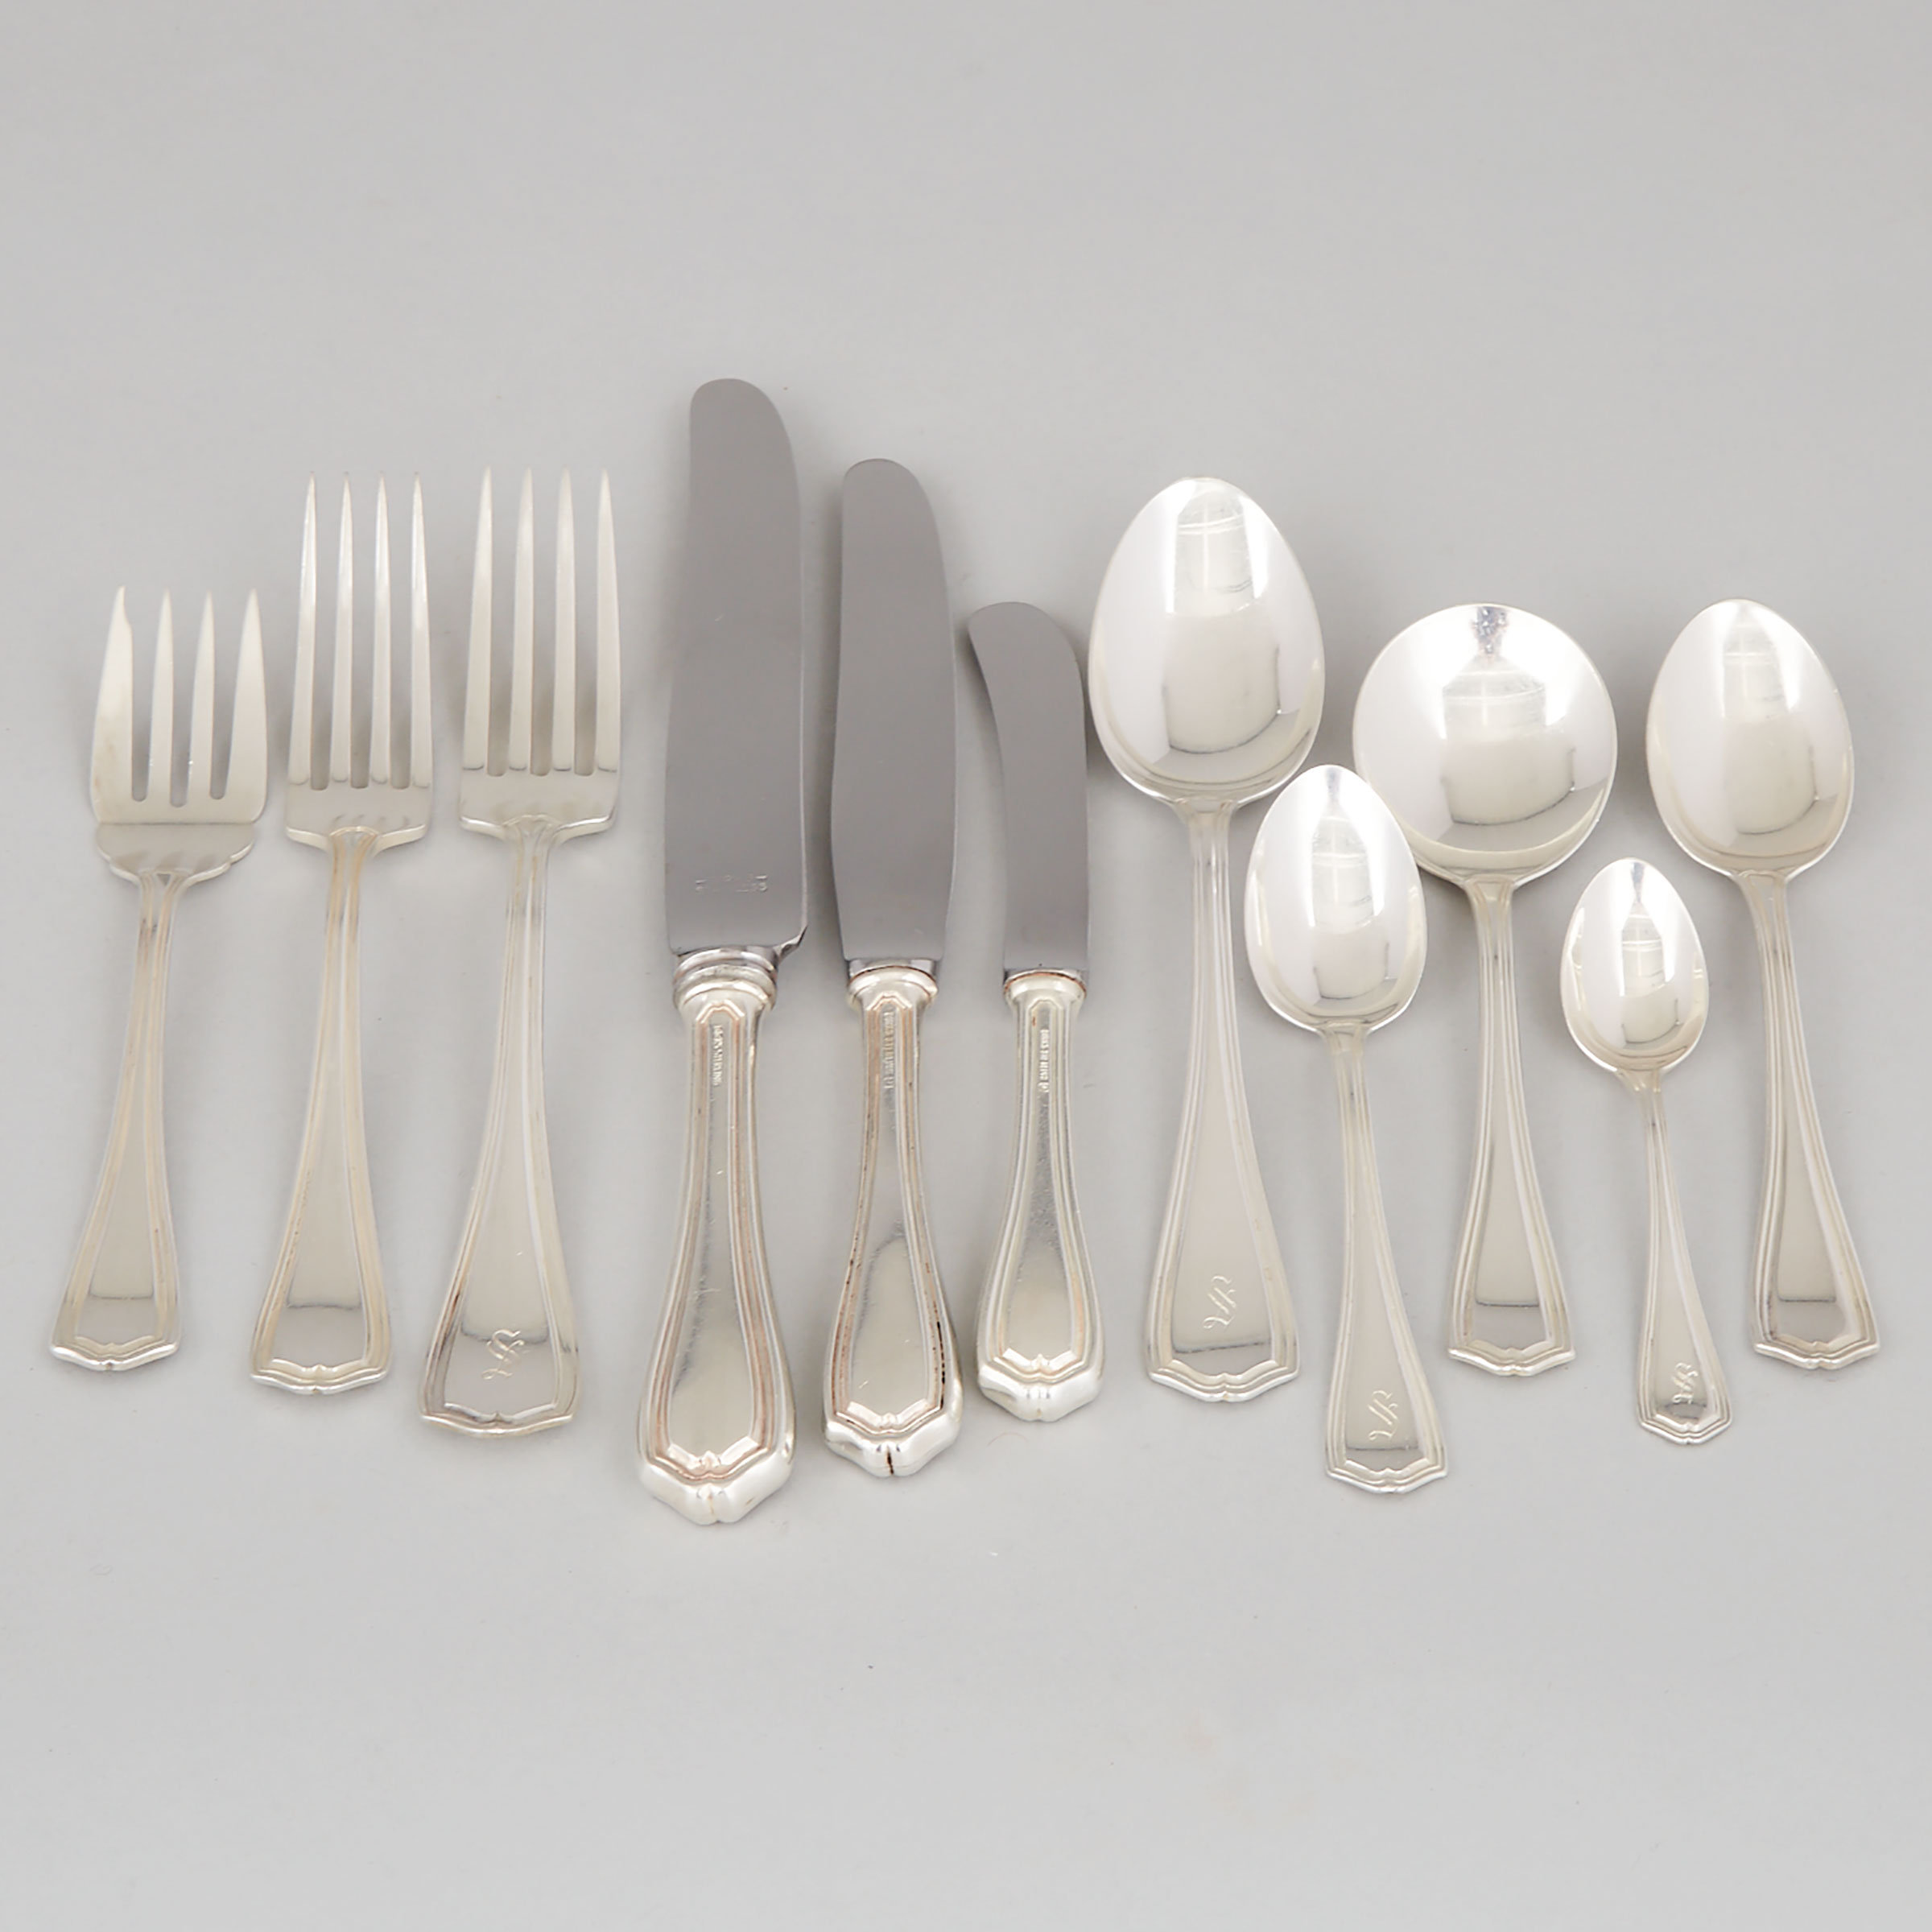 Canadian Silver ‘Georgian Plain’ Pattern Flatware Service, Henry Birks & Sons, Montreal, Que., 20th century